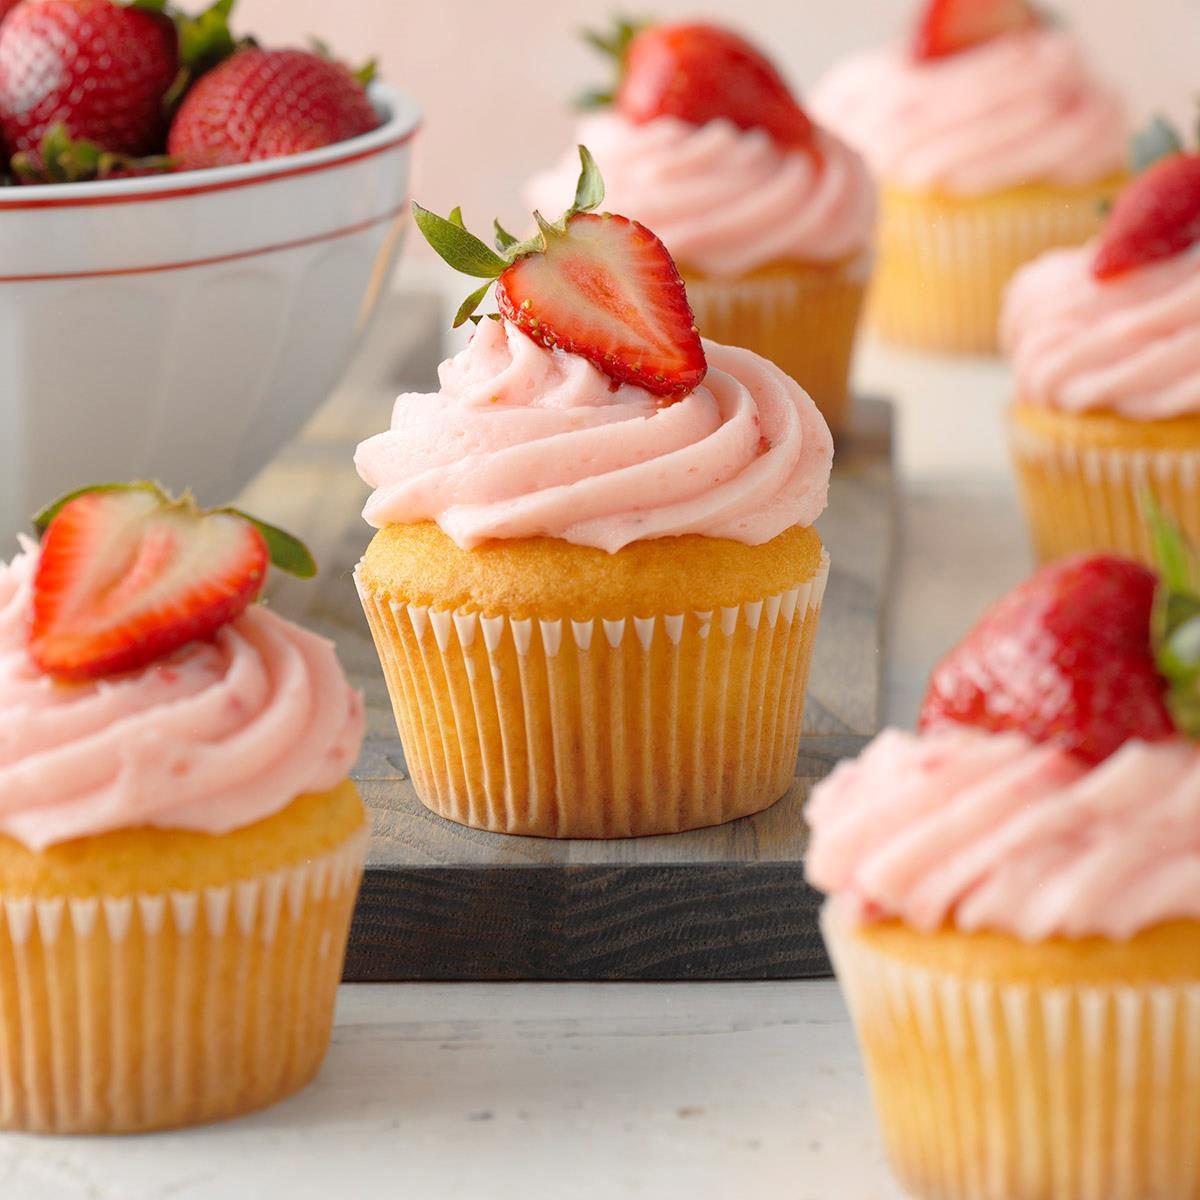 Six Ways to Decorate Spring Cupcakes